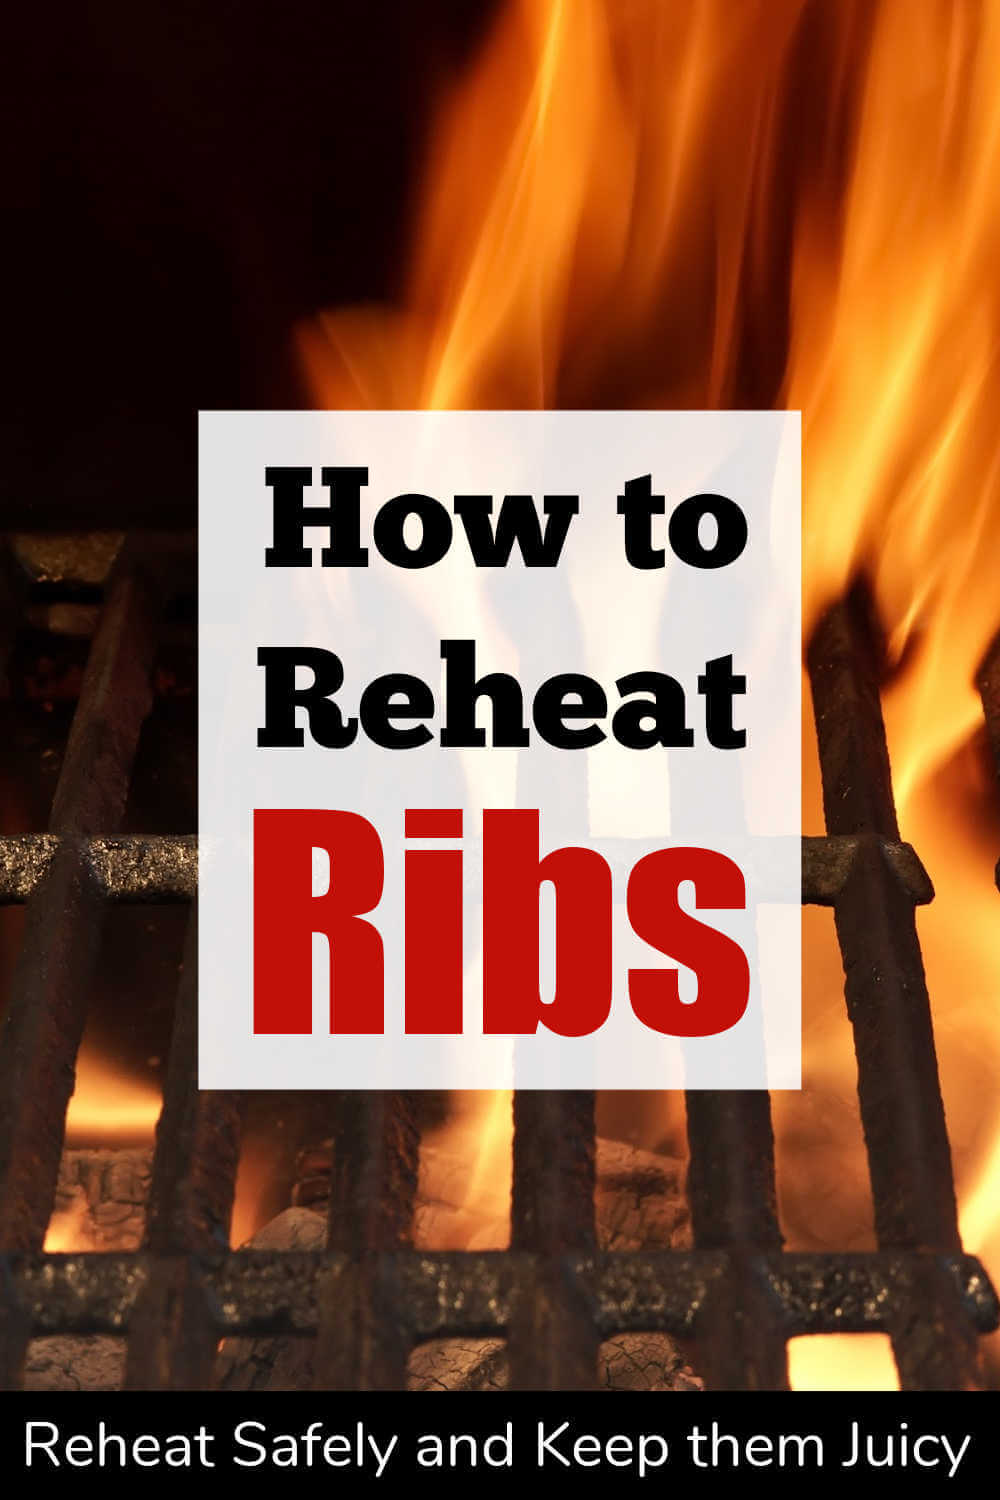 How to Reheat Ribs